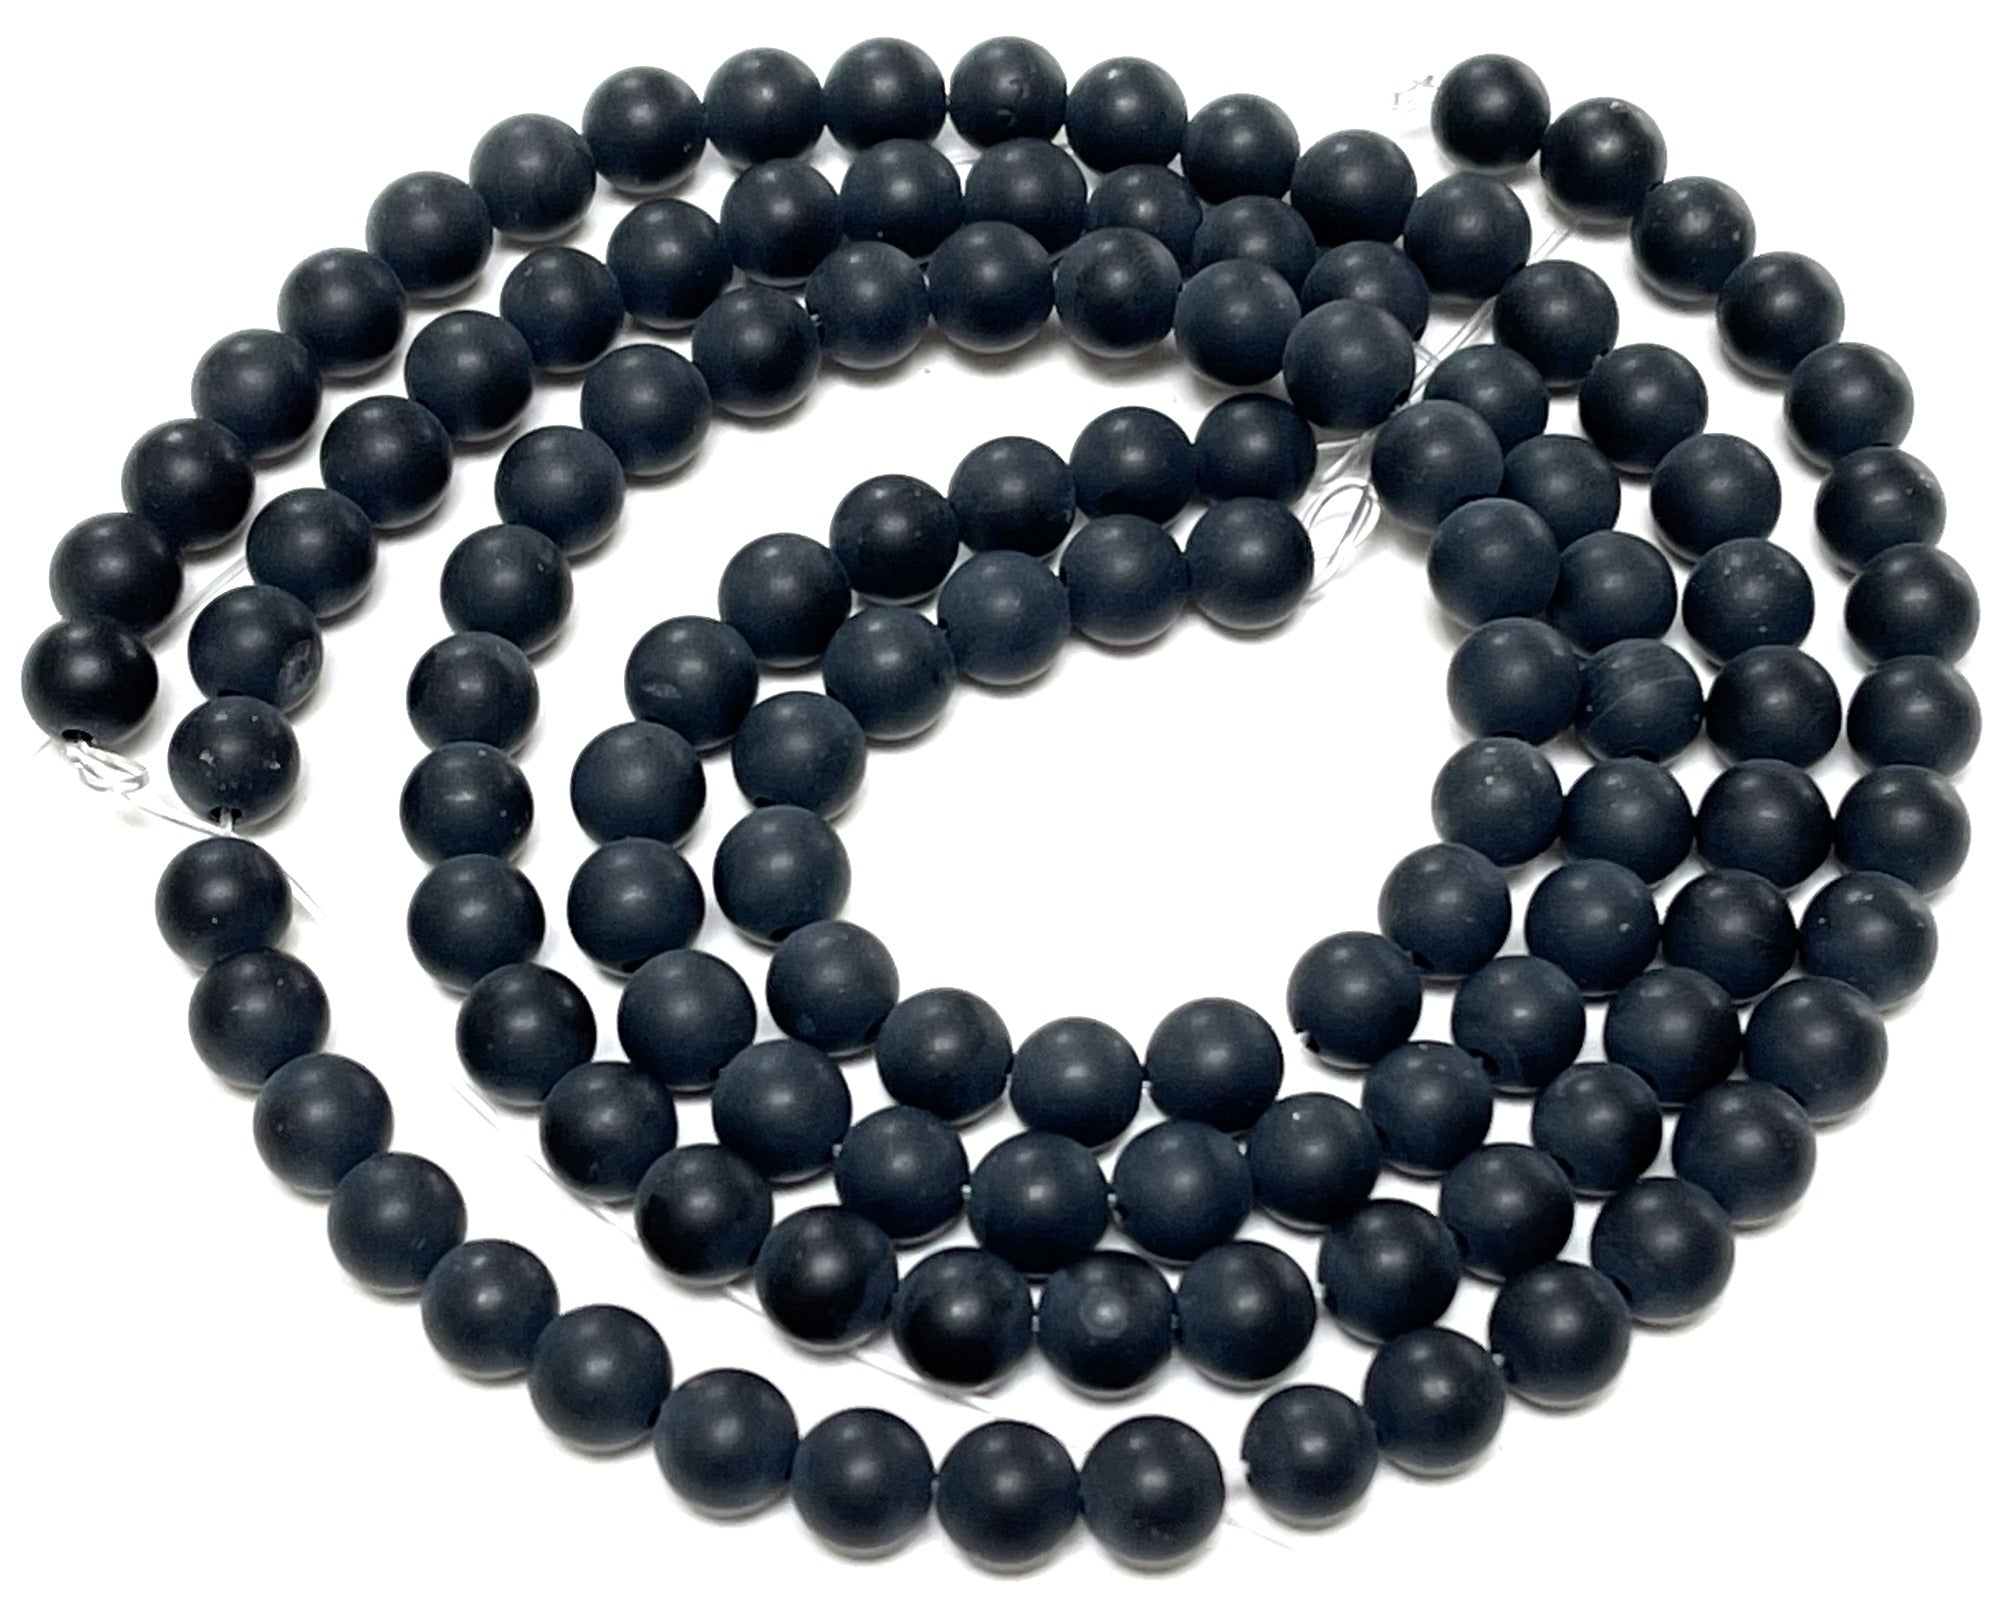 Black Onyx matte 6mm round gemstone beads 15" strand